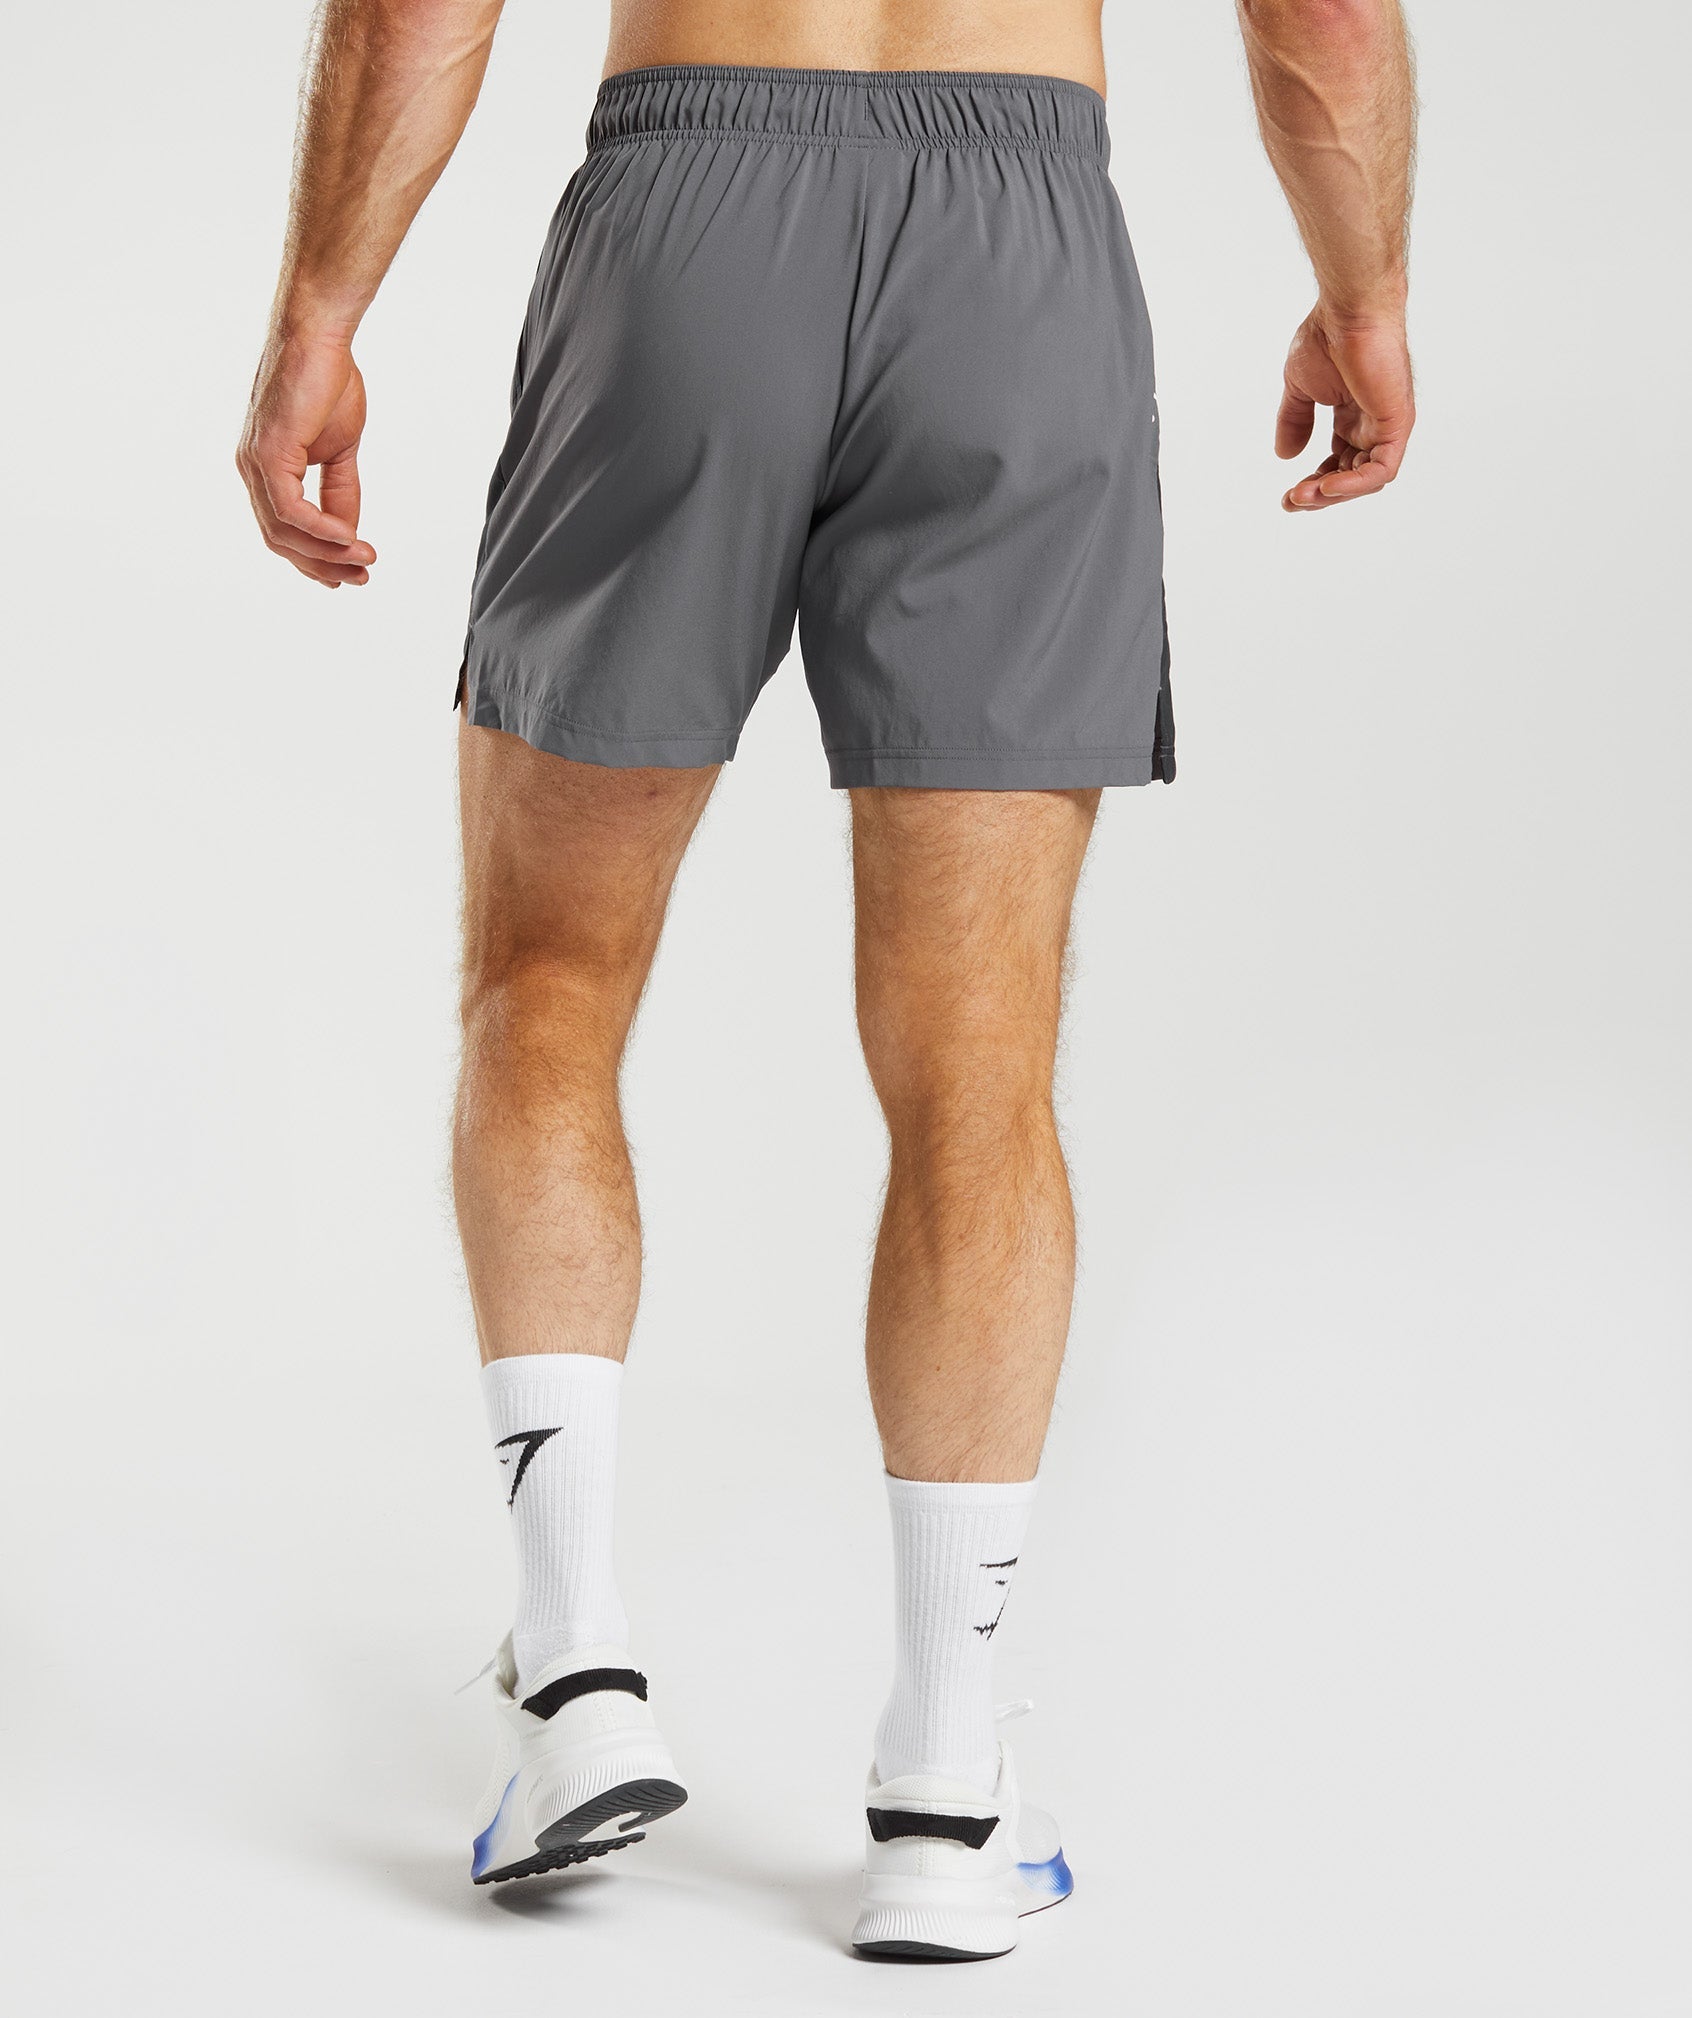 YWDJ Cute Athletic Shorts for Men Quick-drying Running Three-quarter Pants  Fitness Beach Sports Shorts Dark Gray XL 